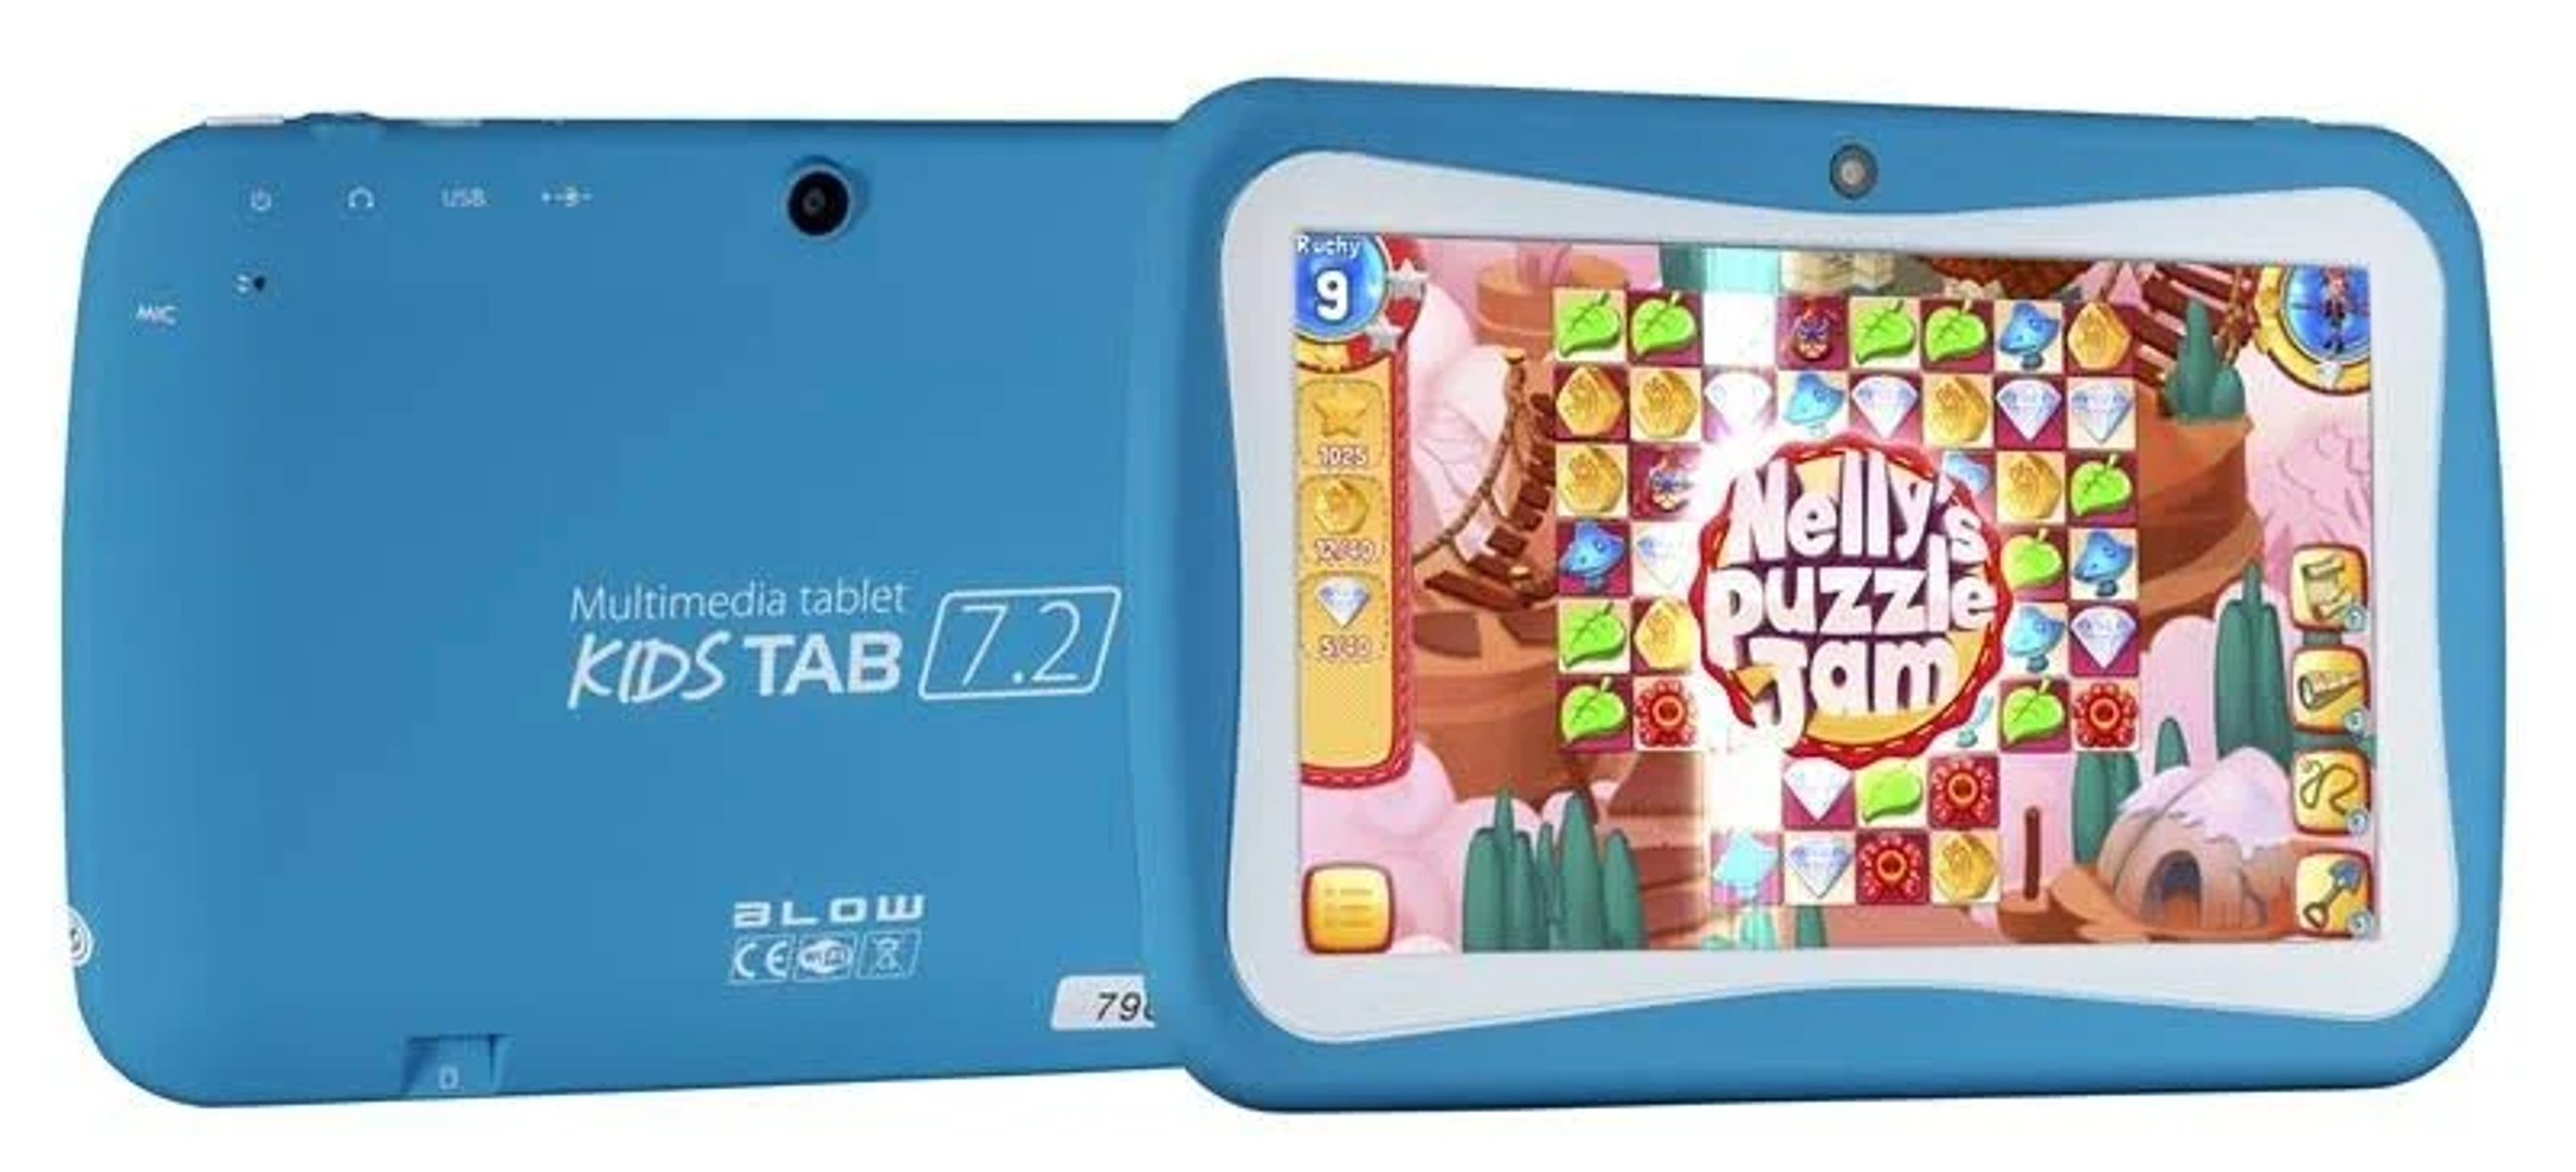 GB, Tablet, KidsTab BLOW 16 Zoll, Blau 7 7 GB, 2/32